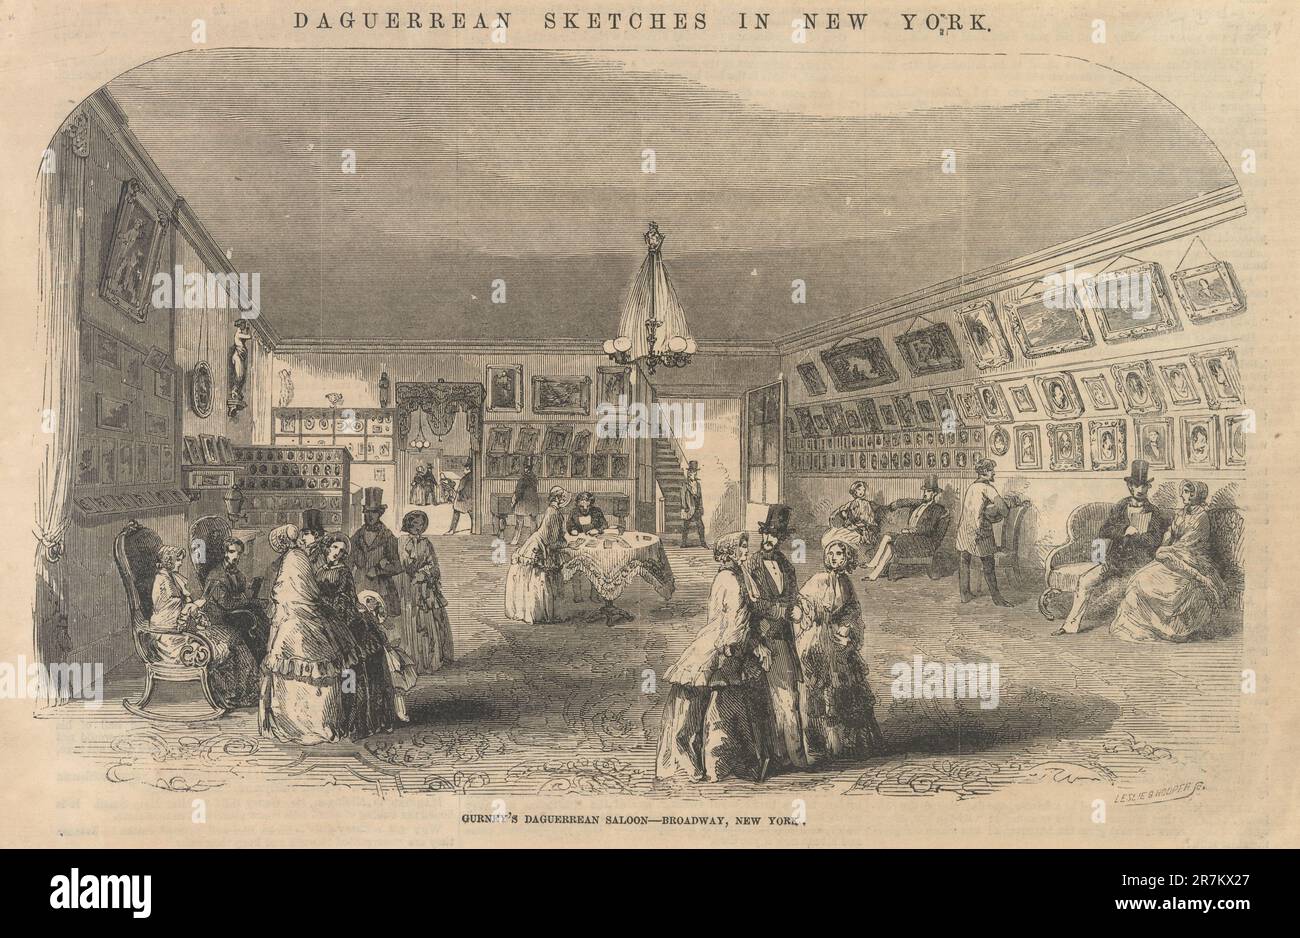 Gurney's Daguerrean Saloon - Broadway, New York 1853 Stockfoto